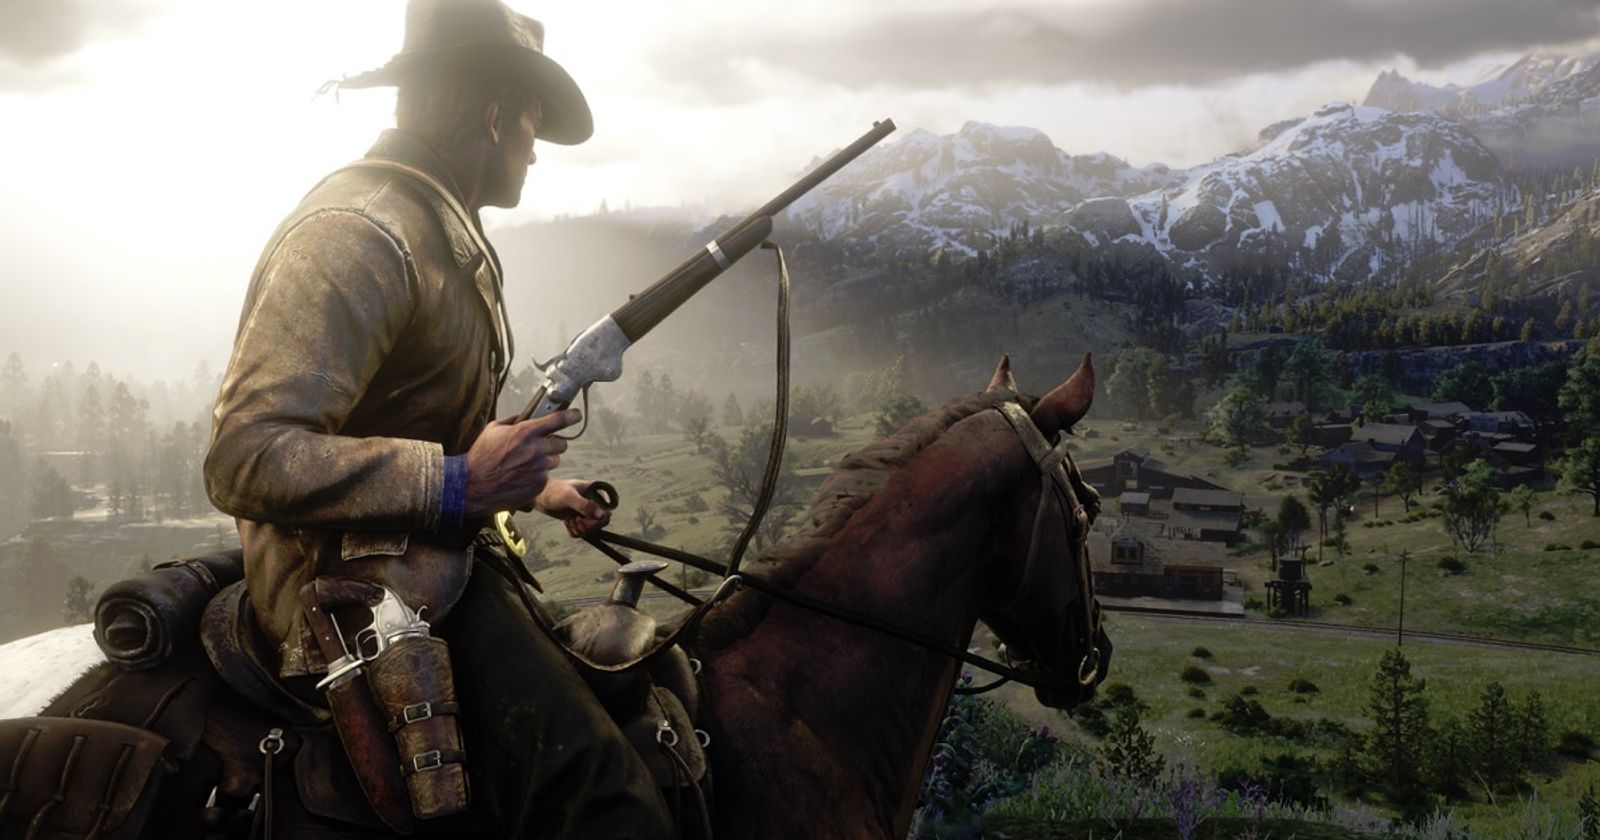 Red Dead Redemption 2 Leak Confirms Previous PS5 & Xbox Series X